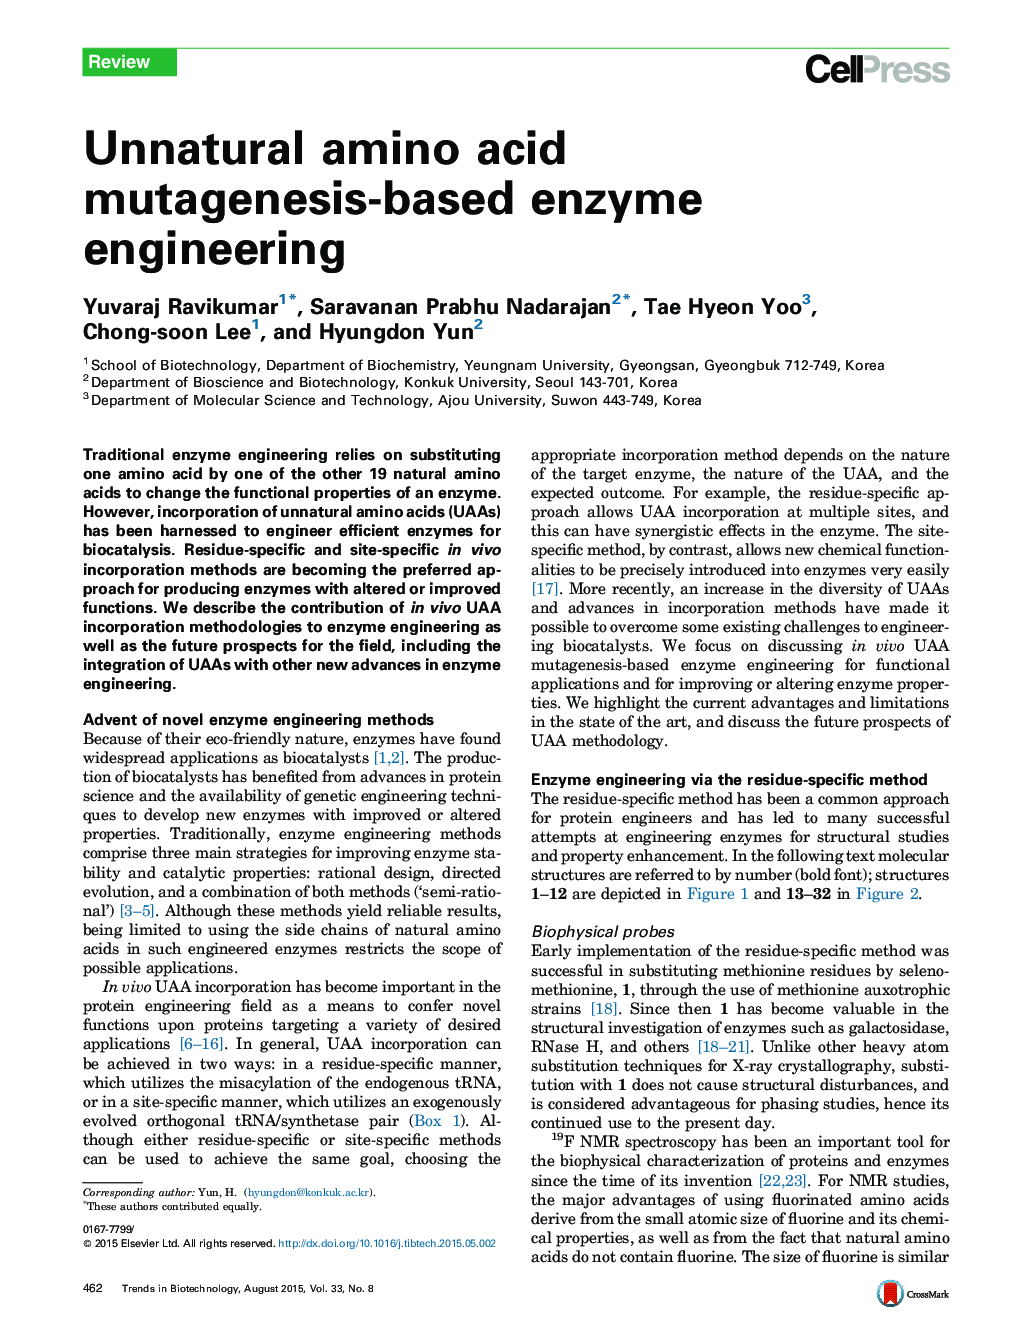 Unnatural amino acid mutagenesis-based enzyme engineering